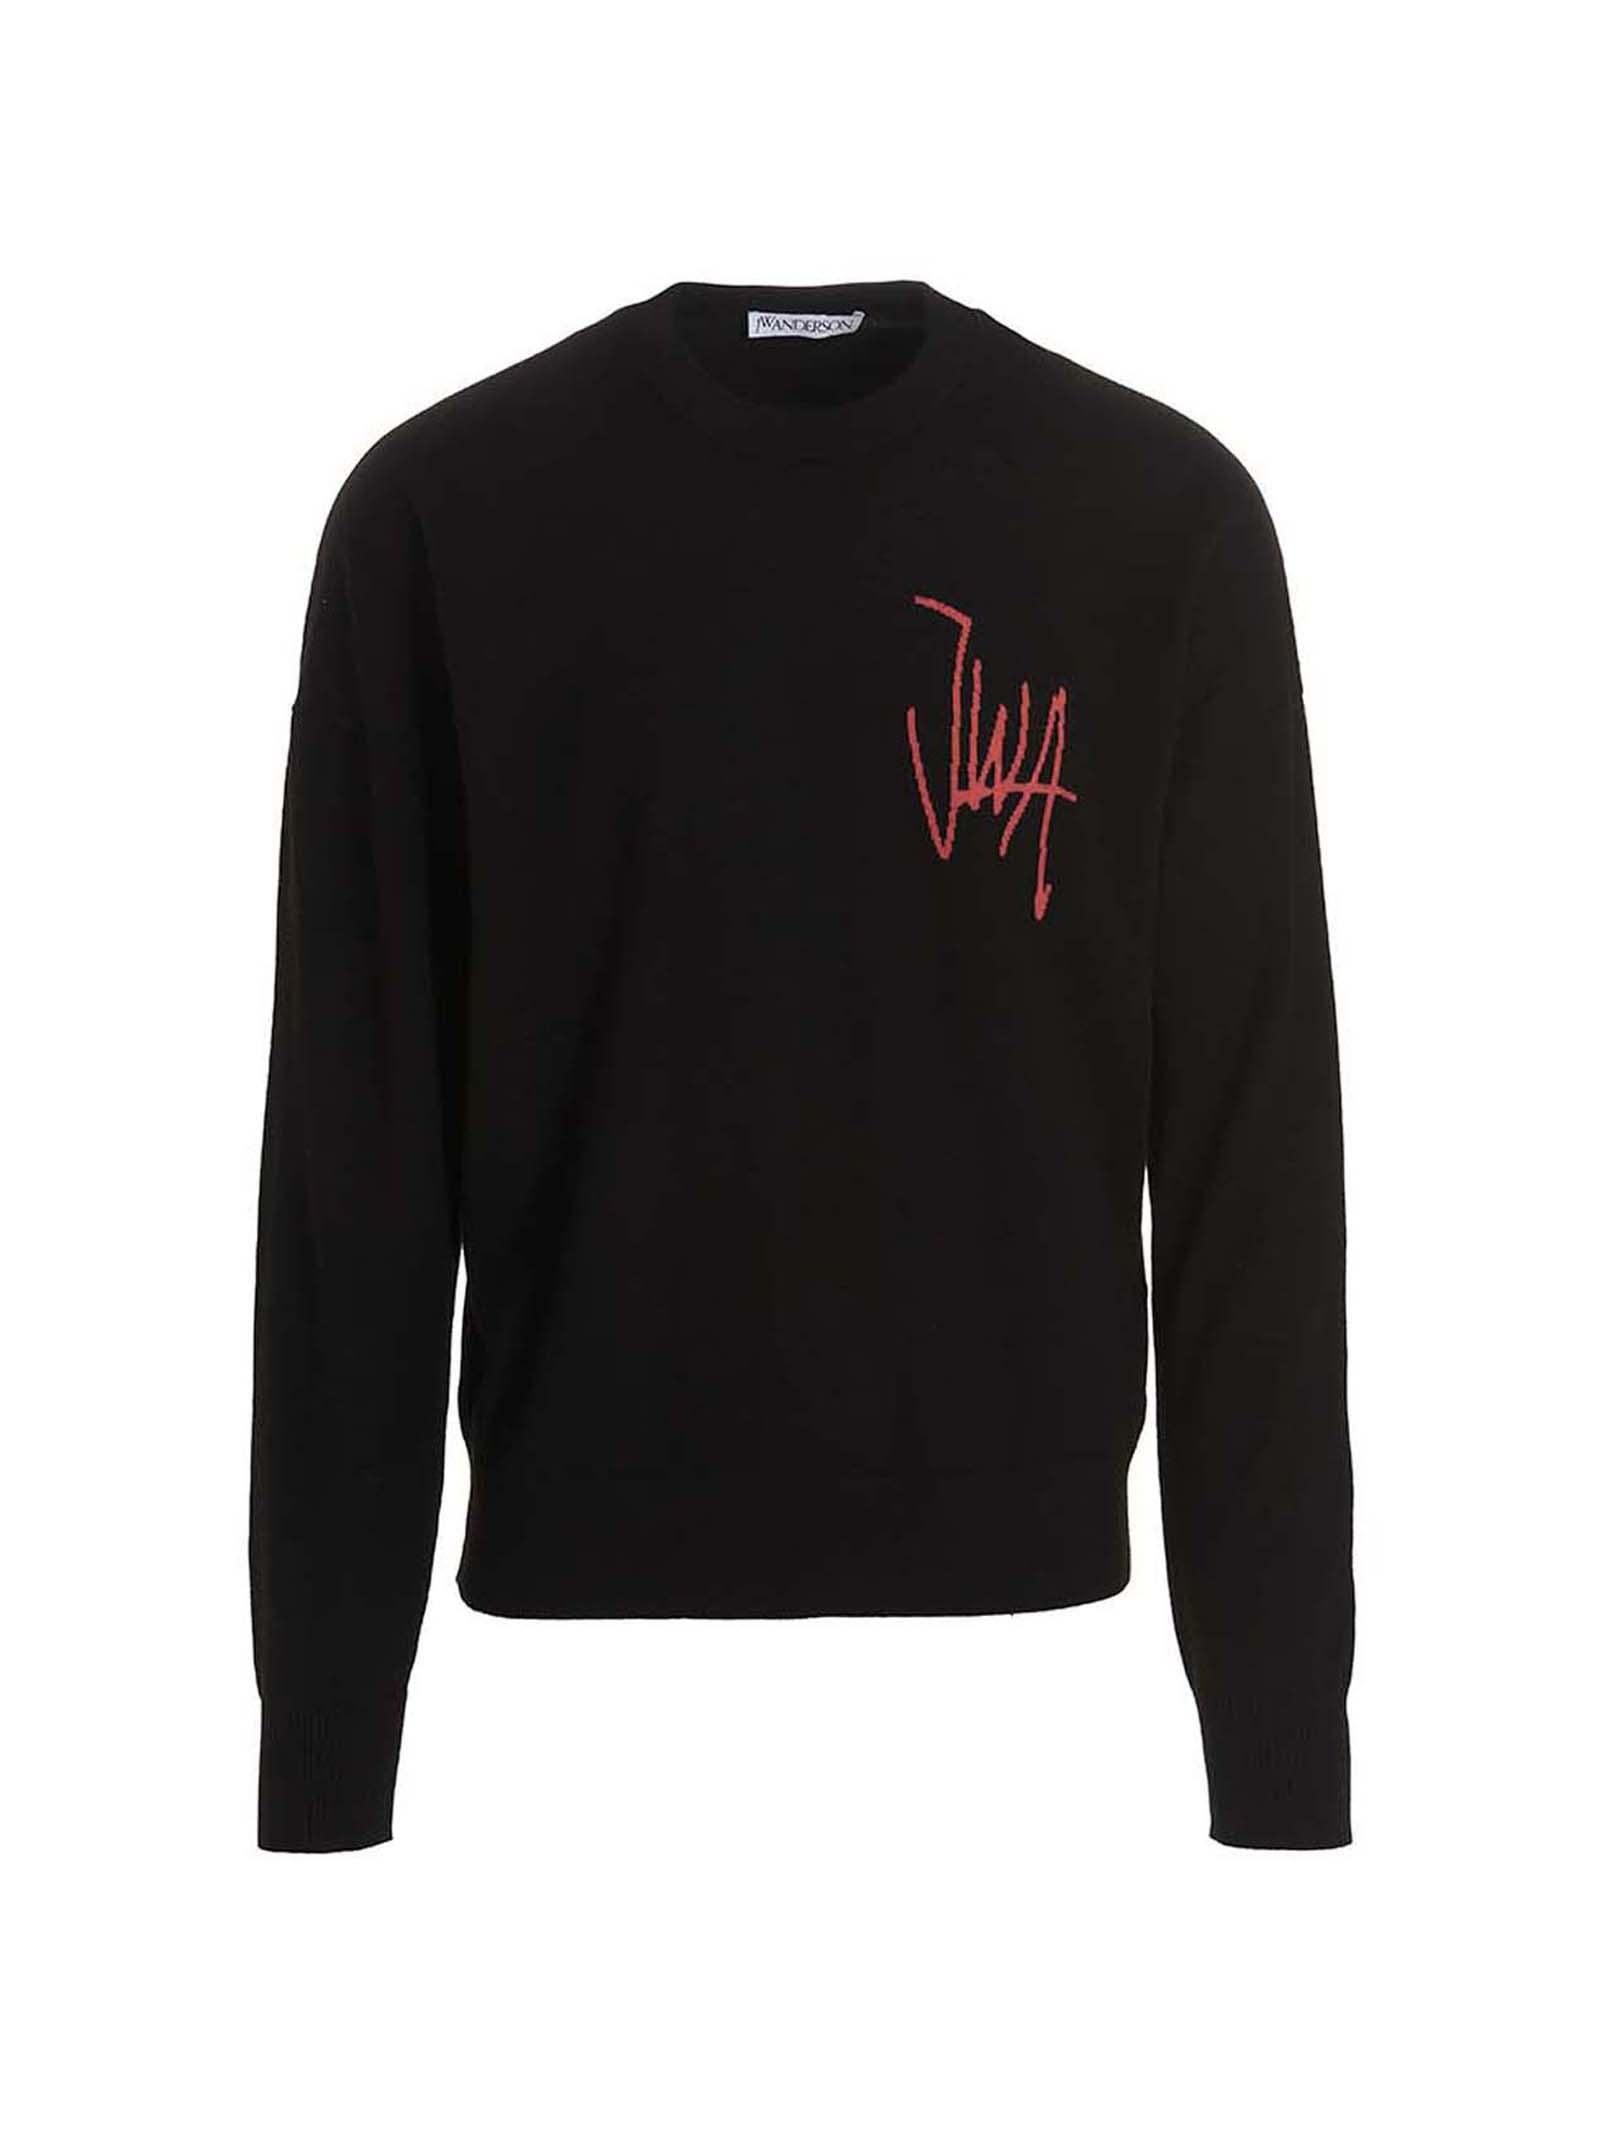 JW Anderson Jwa Sweater in Black for Men | Lyst